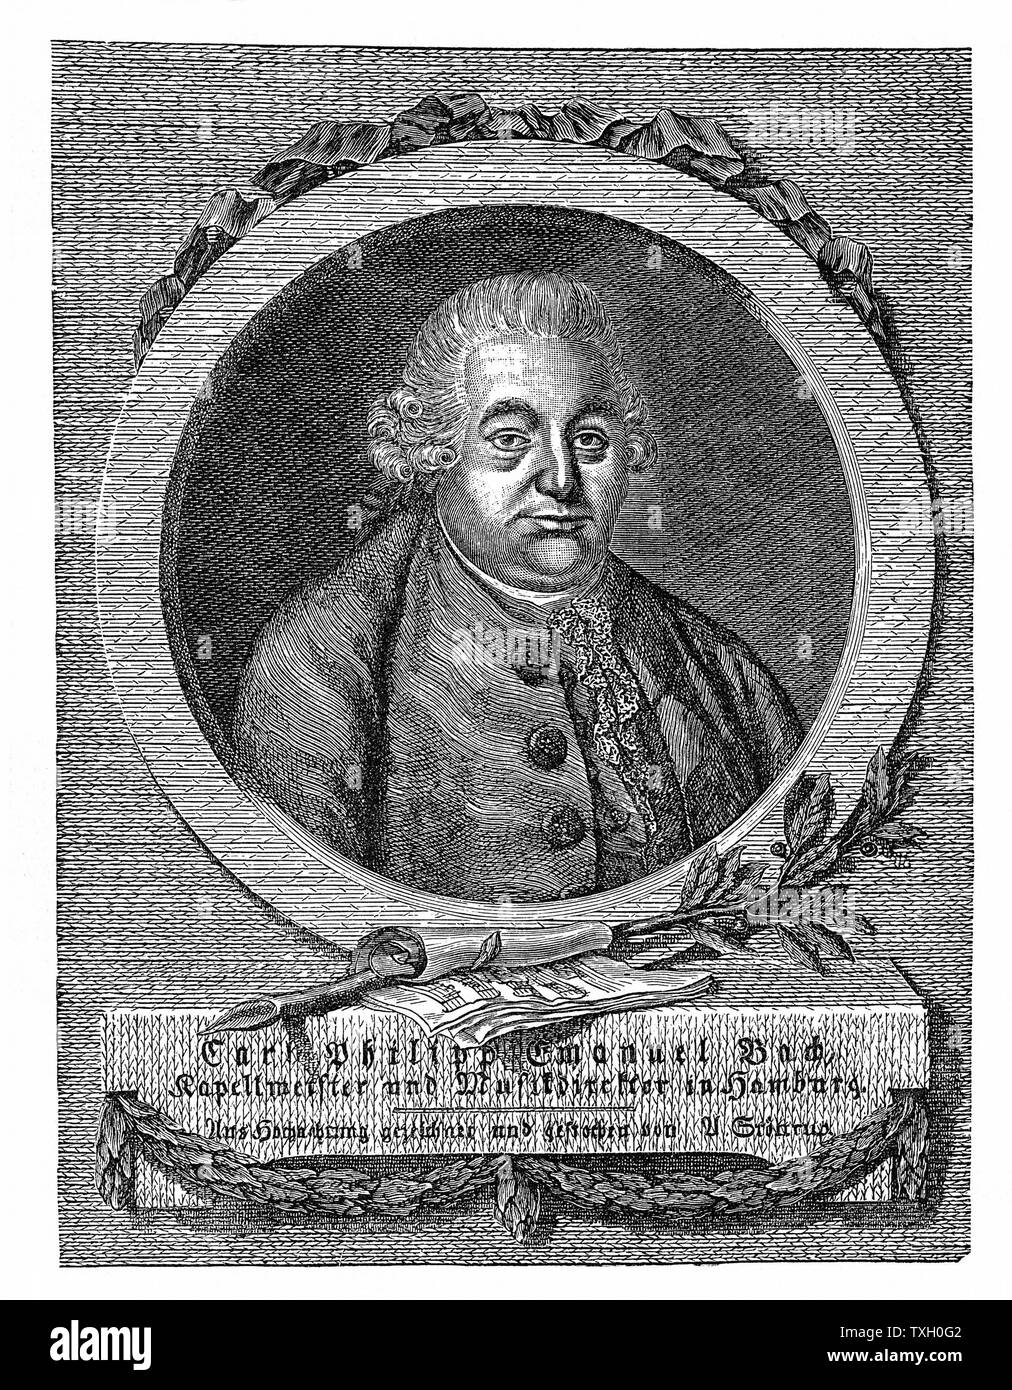 Carl Philipp Emanuel Bach (1714-88) second son of Johann Sebastian Bach; Kapellmeister at Hamburg from 1767. Introduced sonata form. Was left-handed.  Engraving Stock Photo